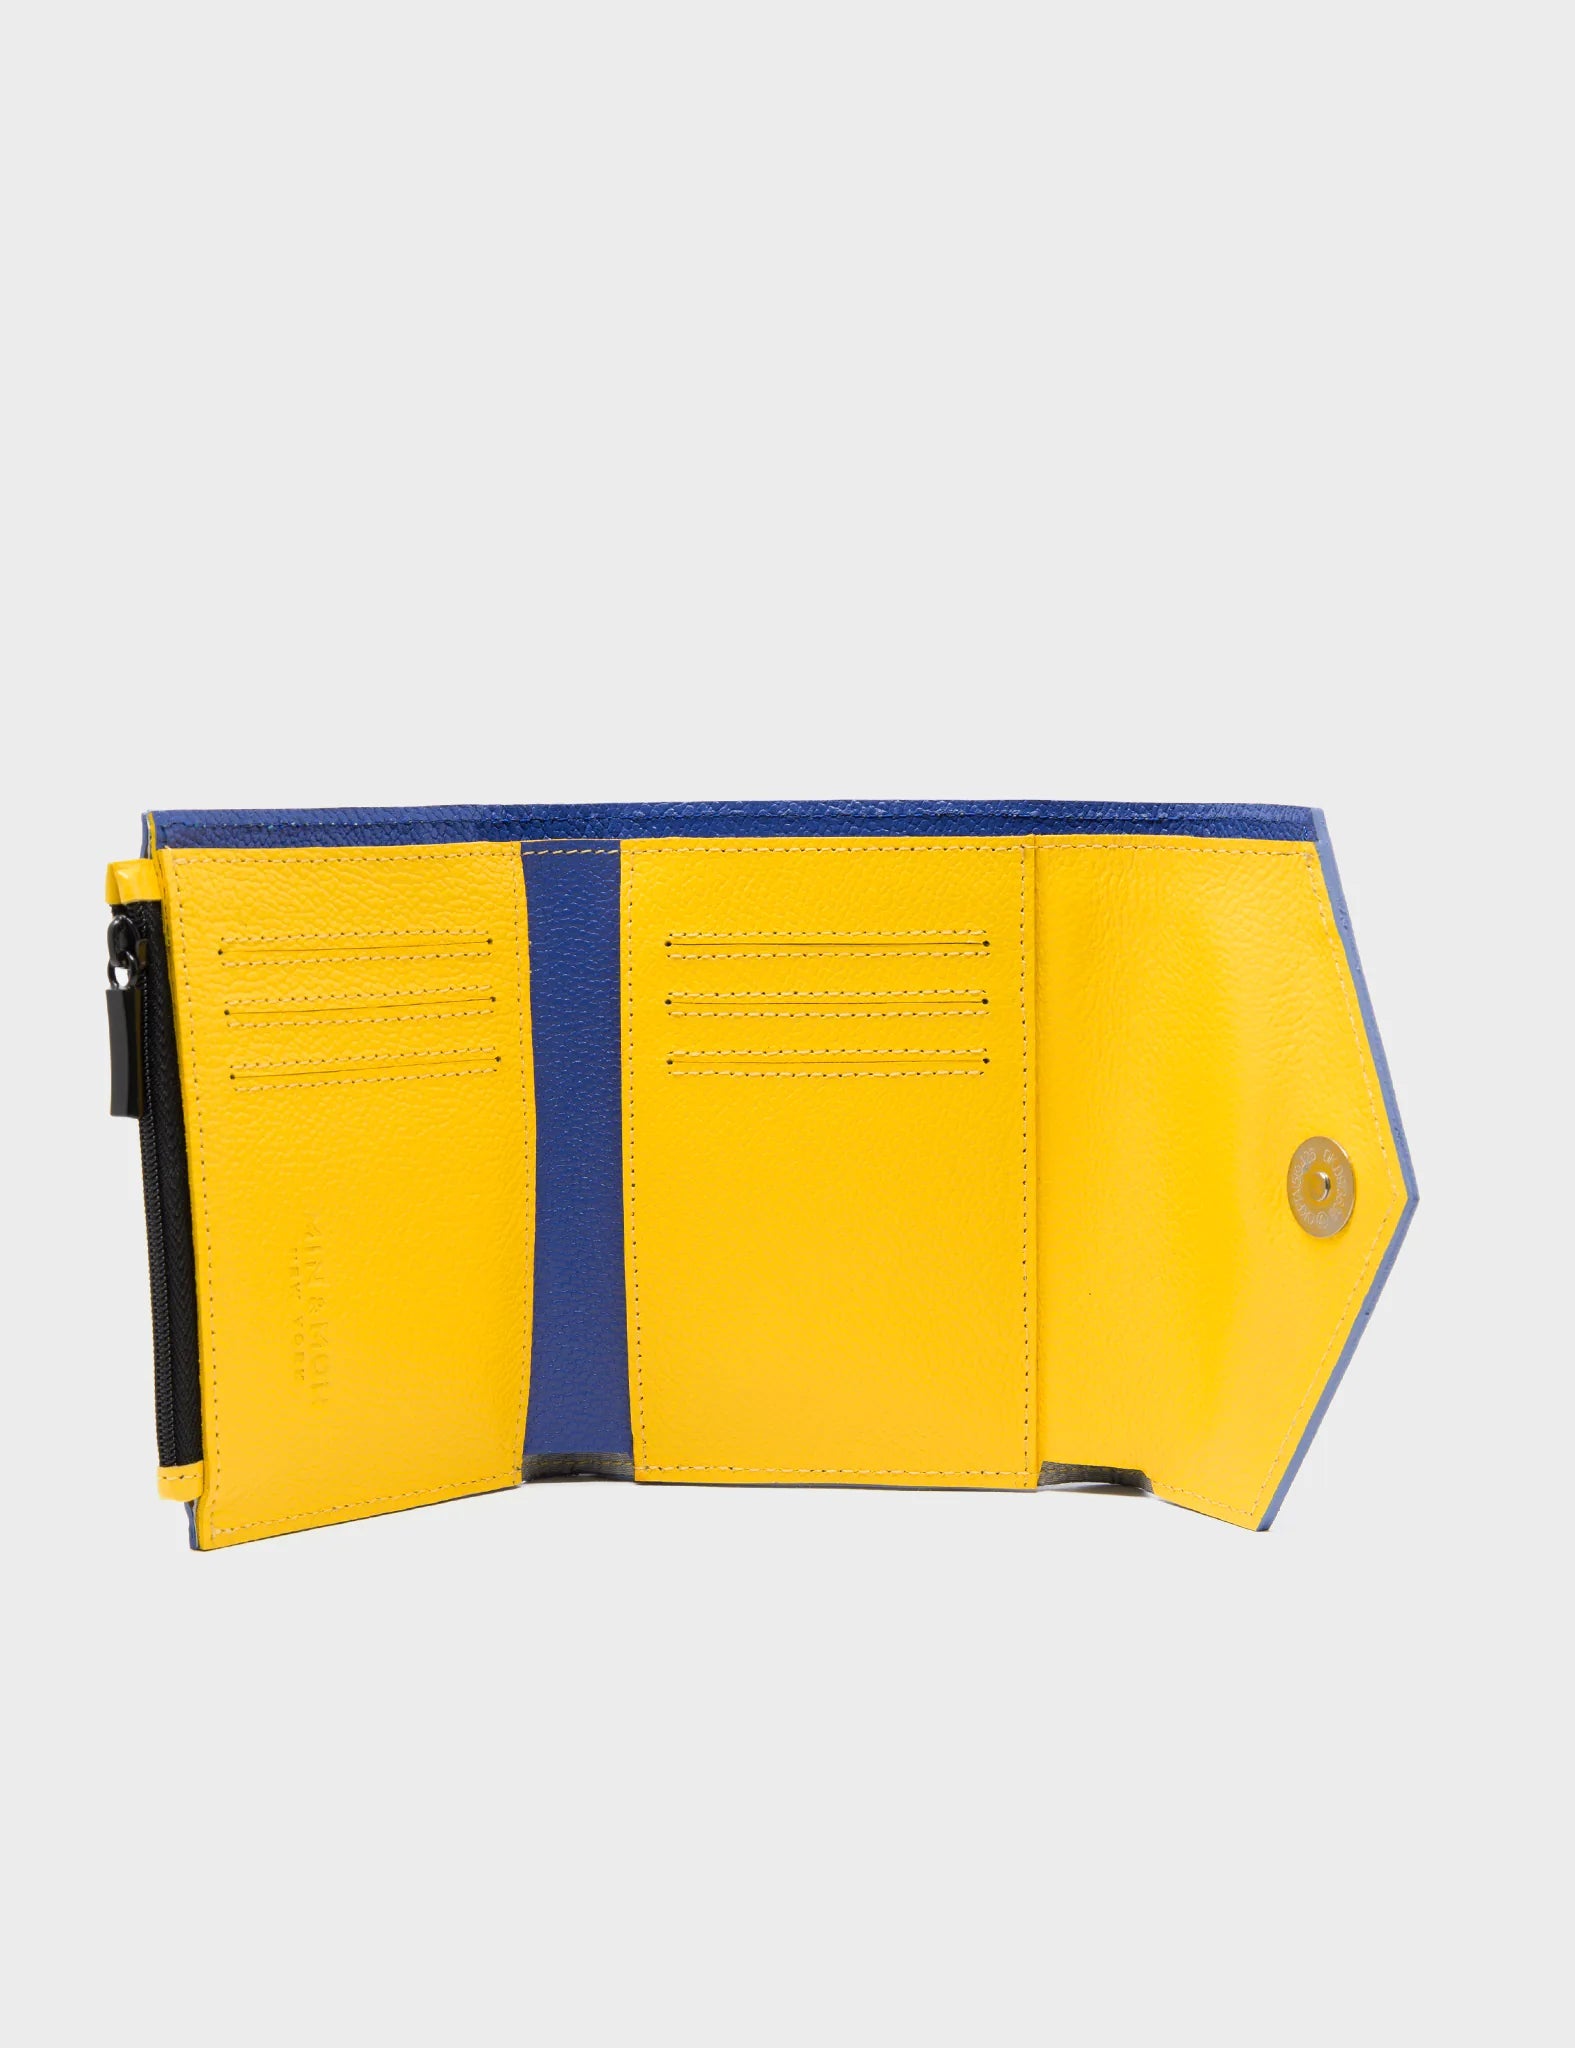 Billfold Blue Wallet With Flap | Multicolored Octopus Design  - Inside 